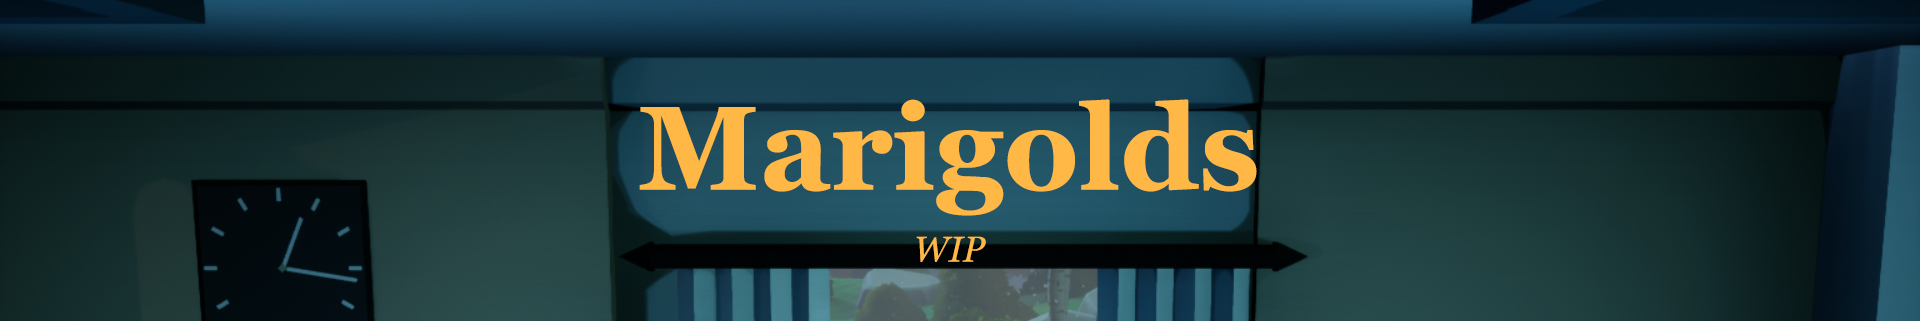 Marigolds(WIP)